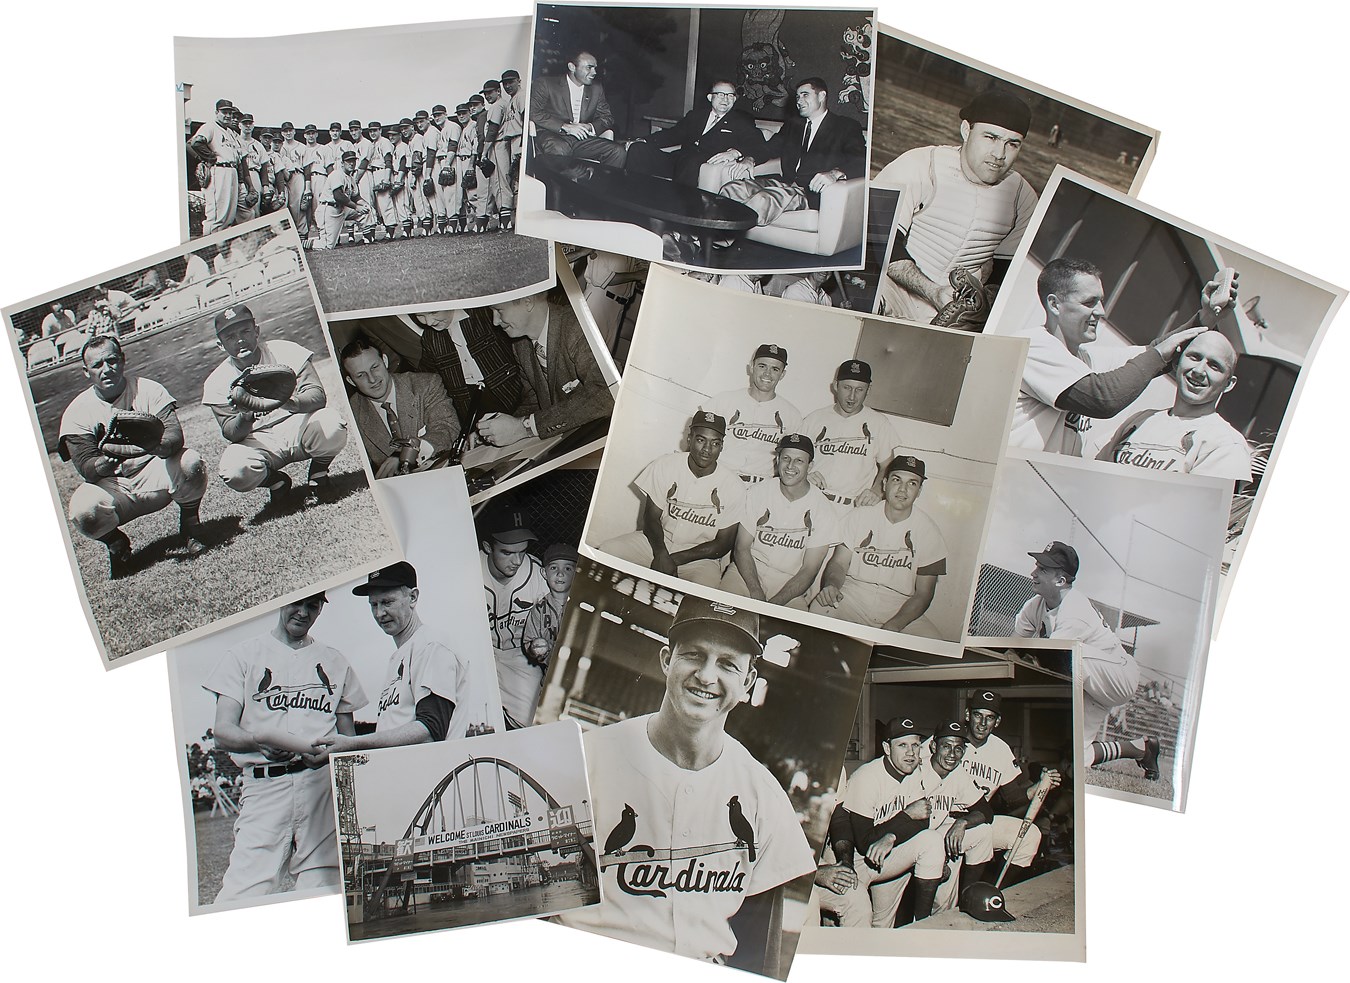 St. Louis Cardinals - Fabulous Team-Signed Baseballs, Autographs & Type I Photos from MLer Hal Smith (54)